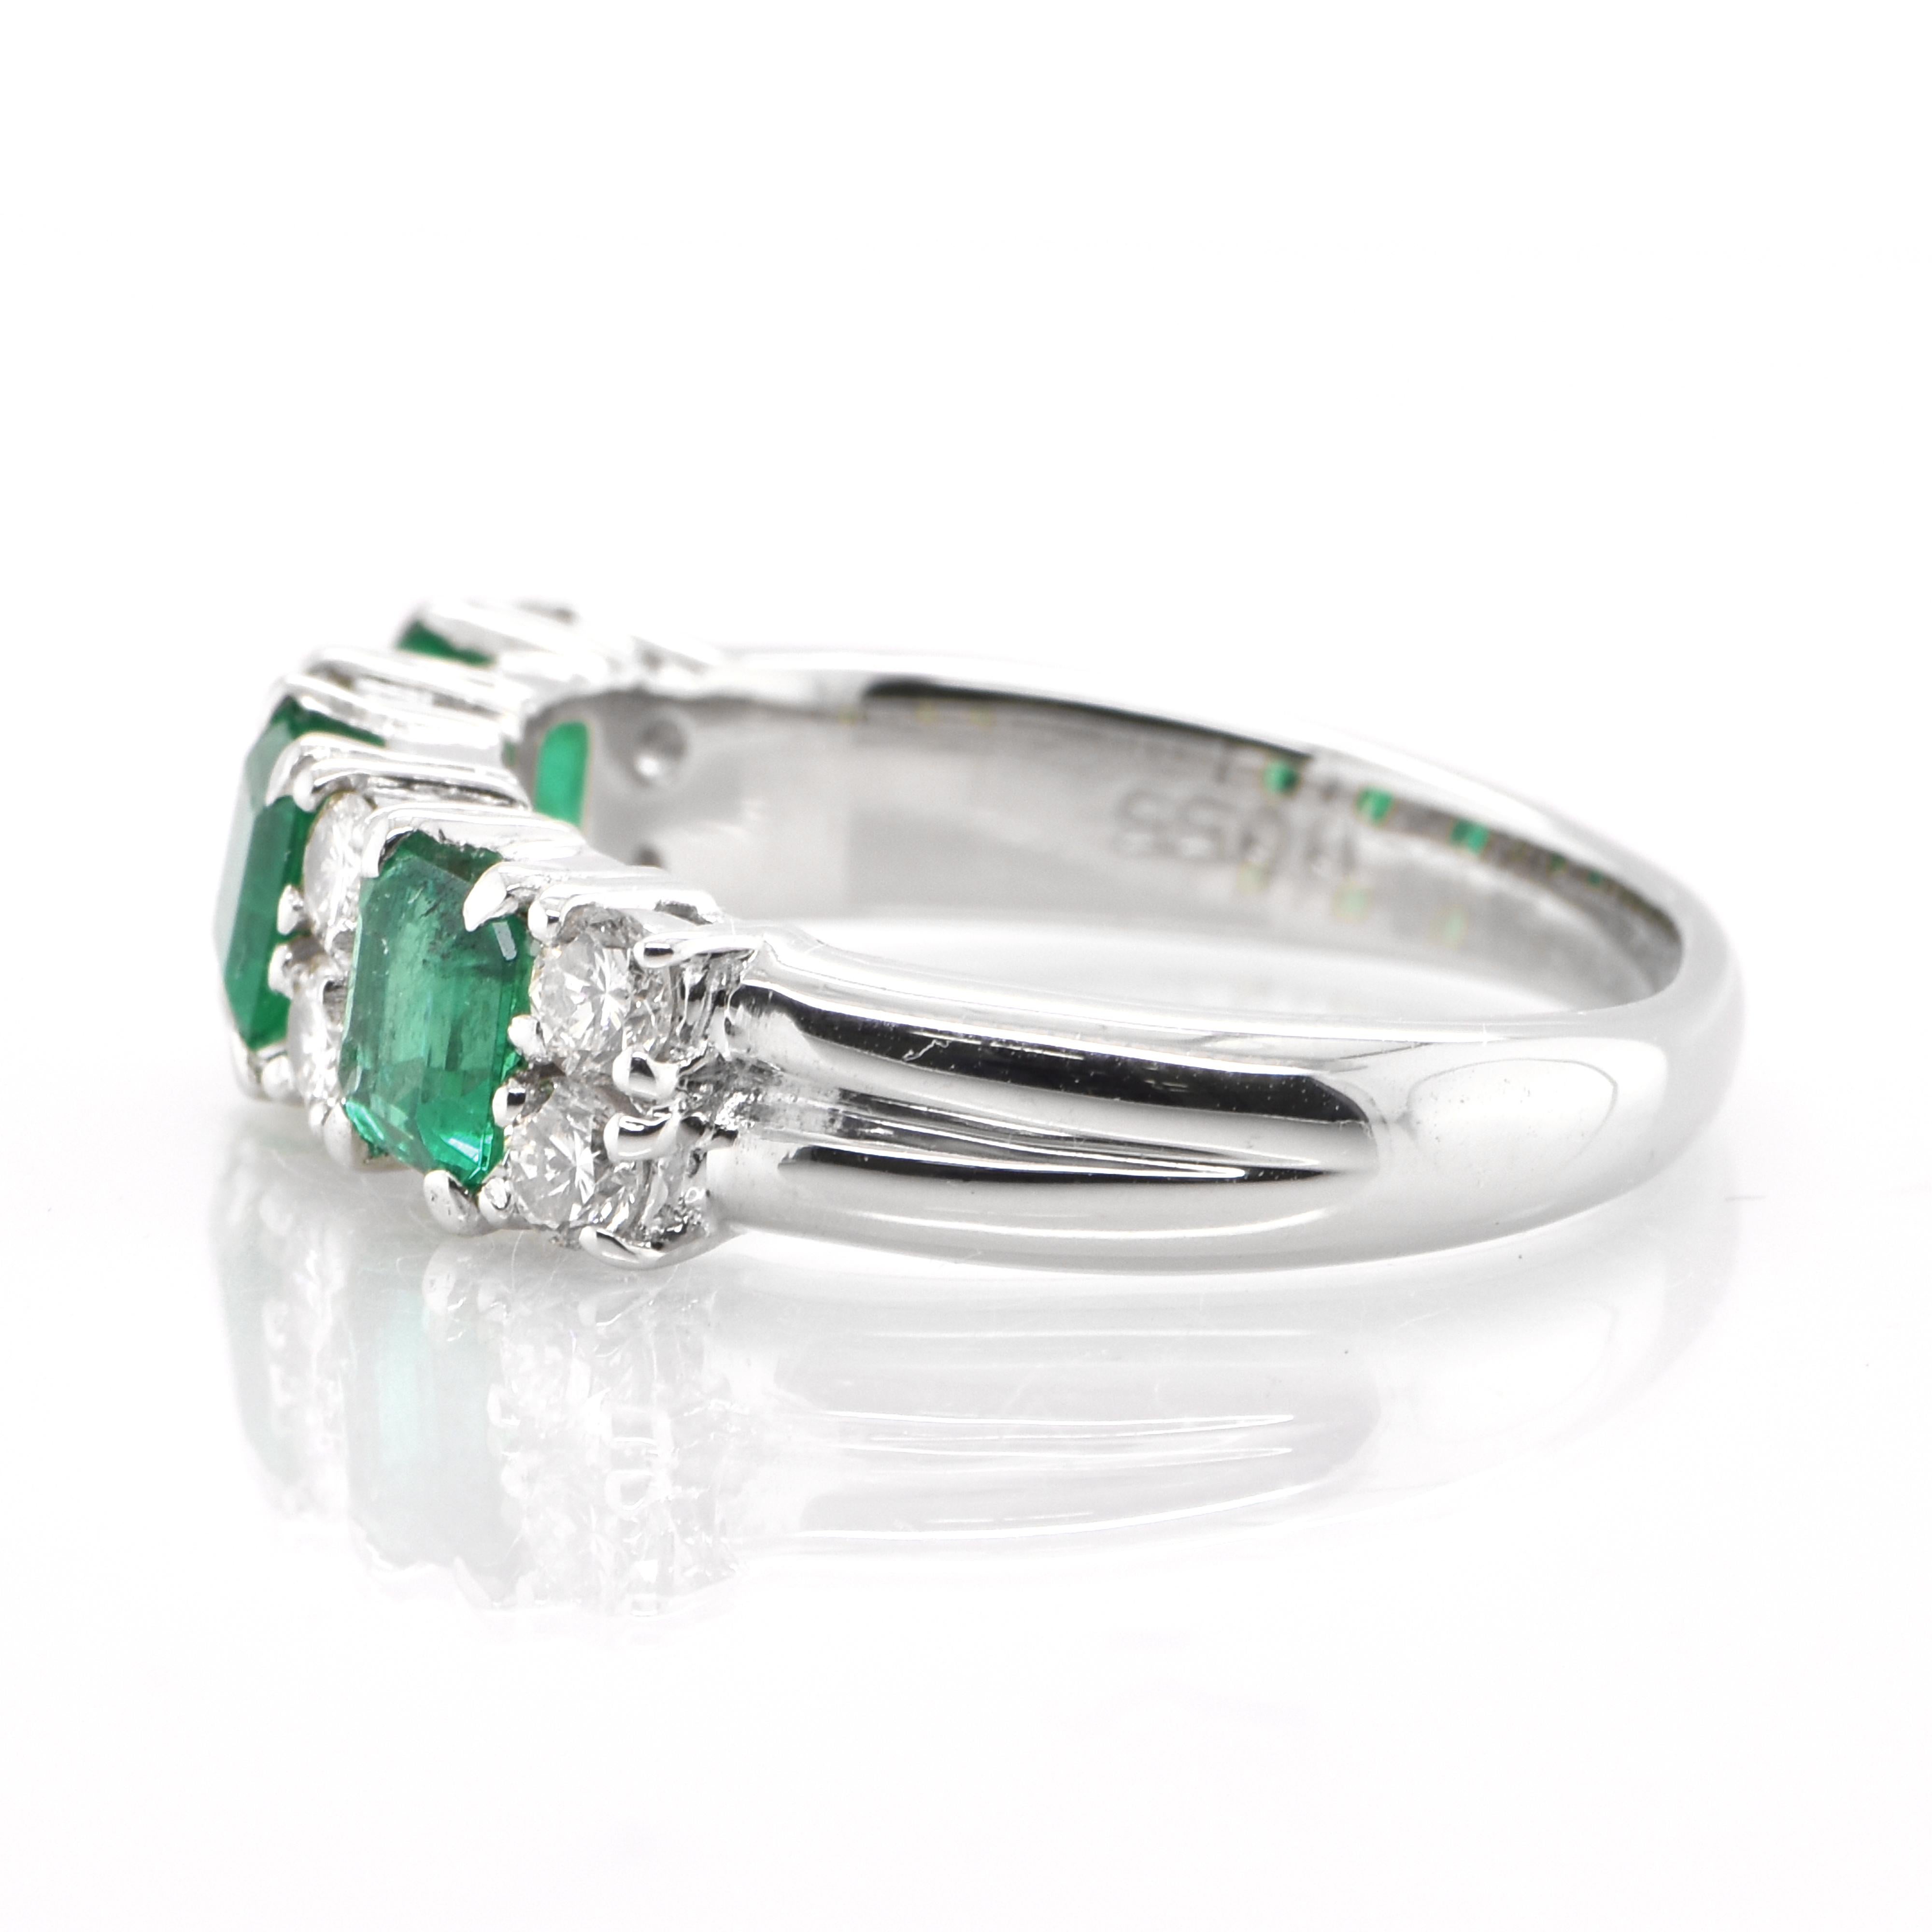 Emerald Cut 1.03 Carat Emerald and Diamond Half-Eternity Ring Set in Platinum